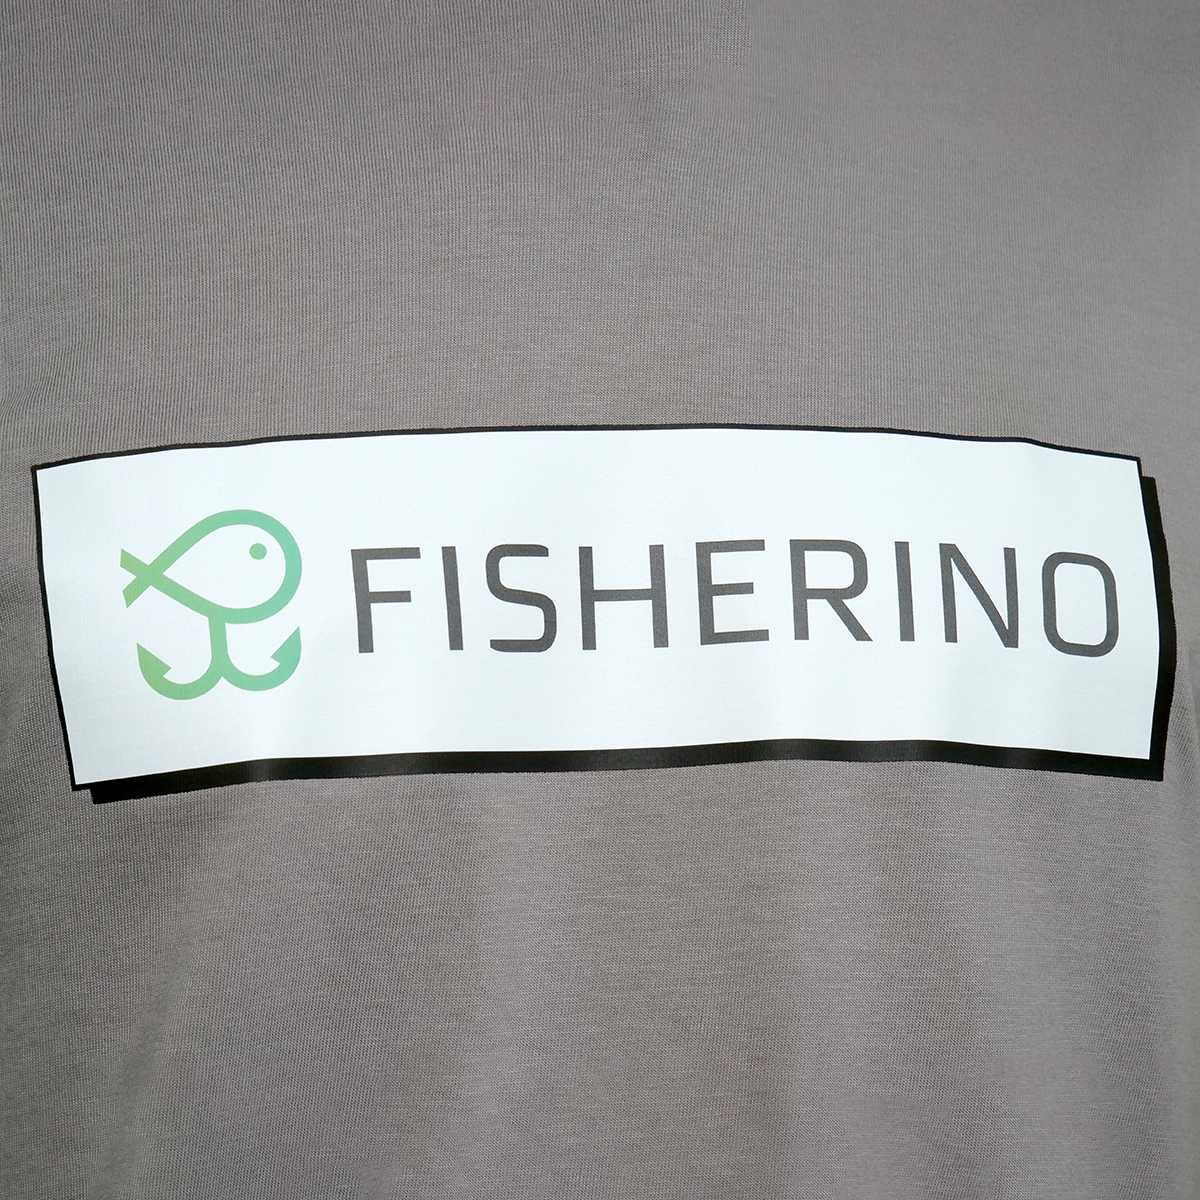 Fisherino Crew Shirt V-Neck